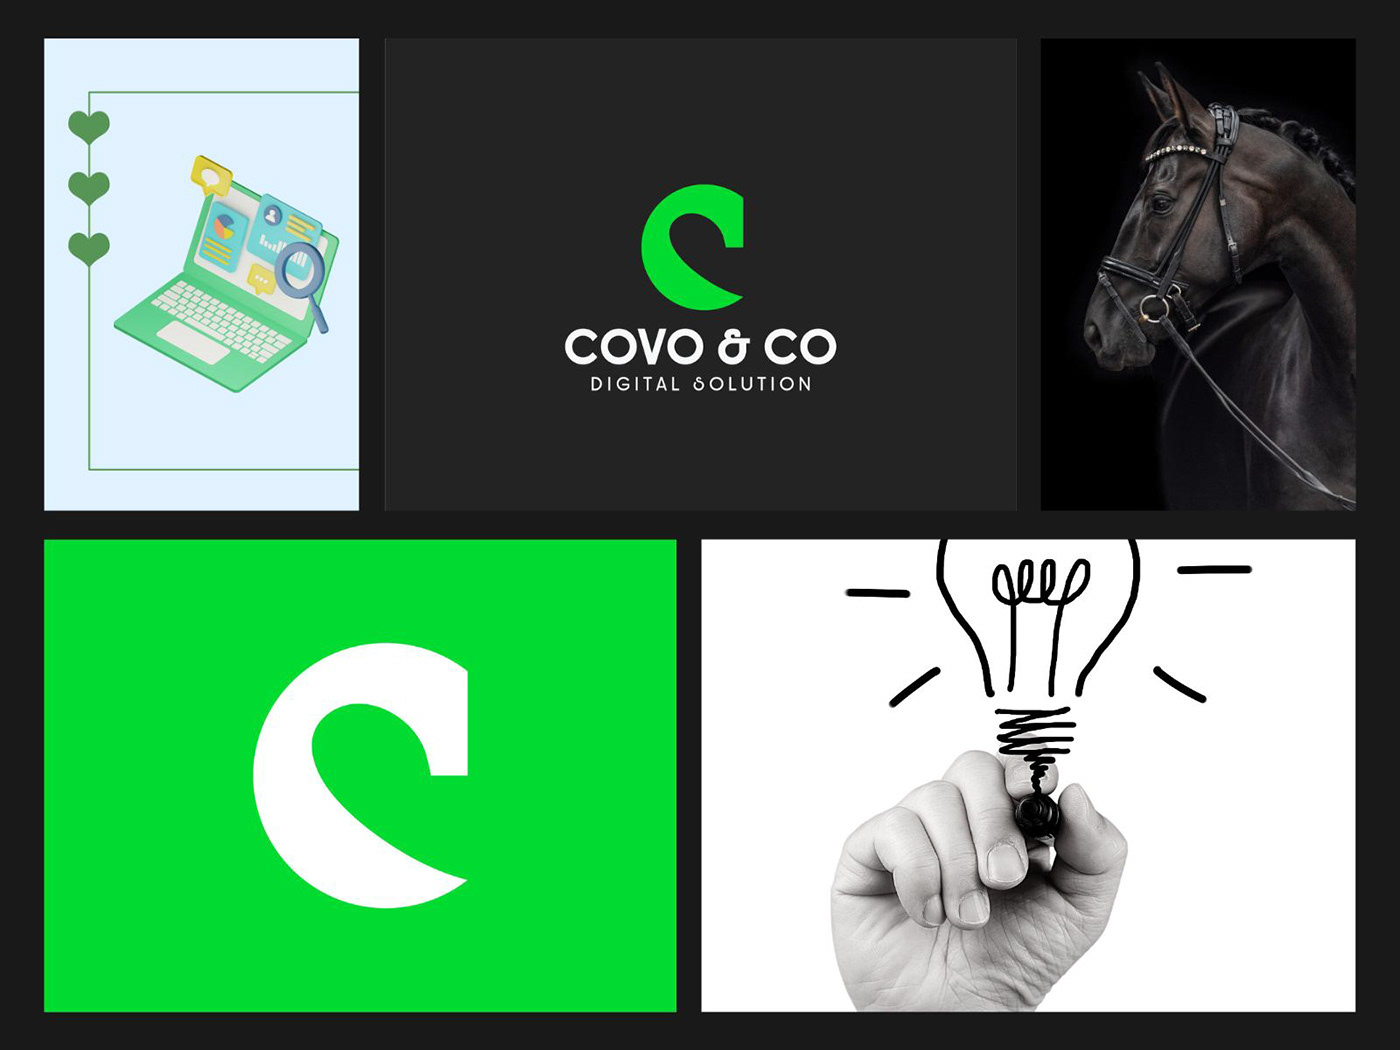 Technology tech finance service creative minimalist brand identity visual logo